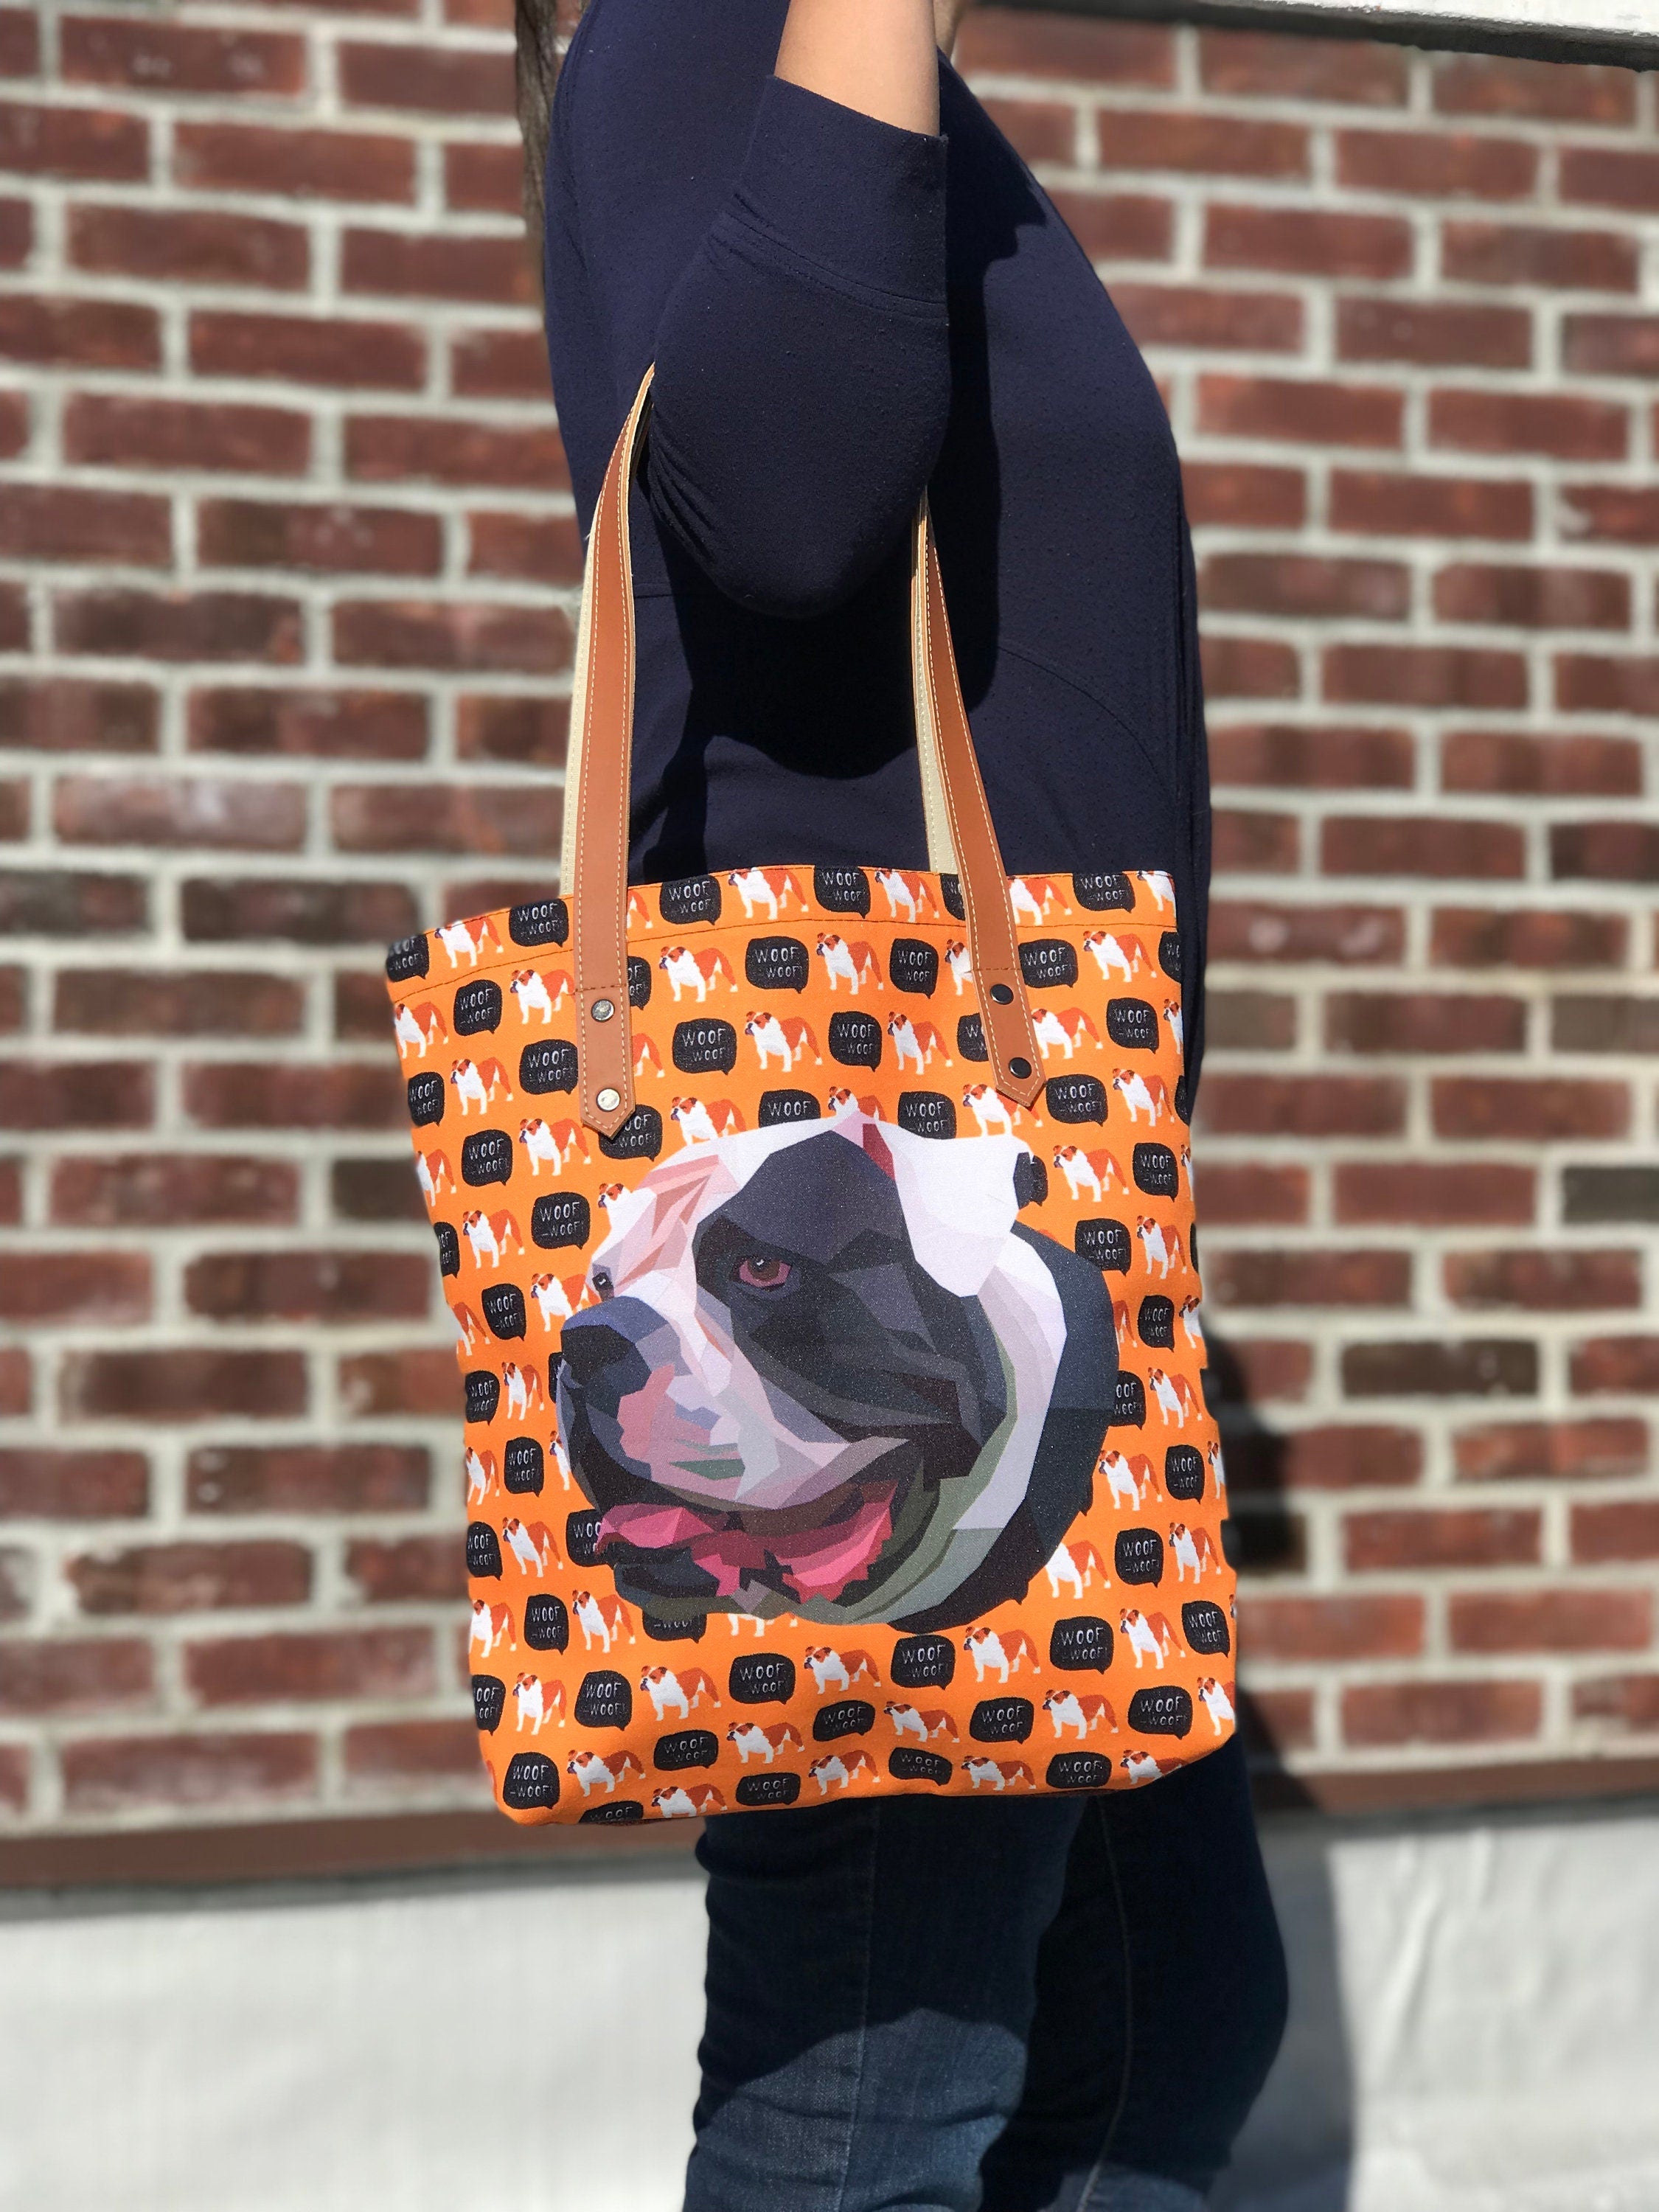 Bulldog small Tote bag !! Bulldog lover, tote bag, animal lovers, dog lovers.